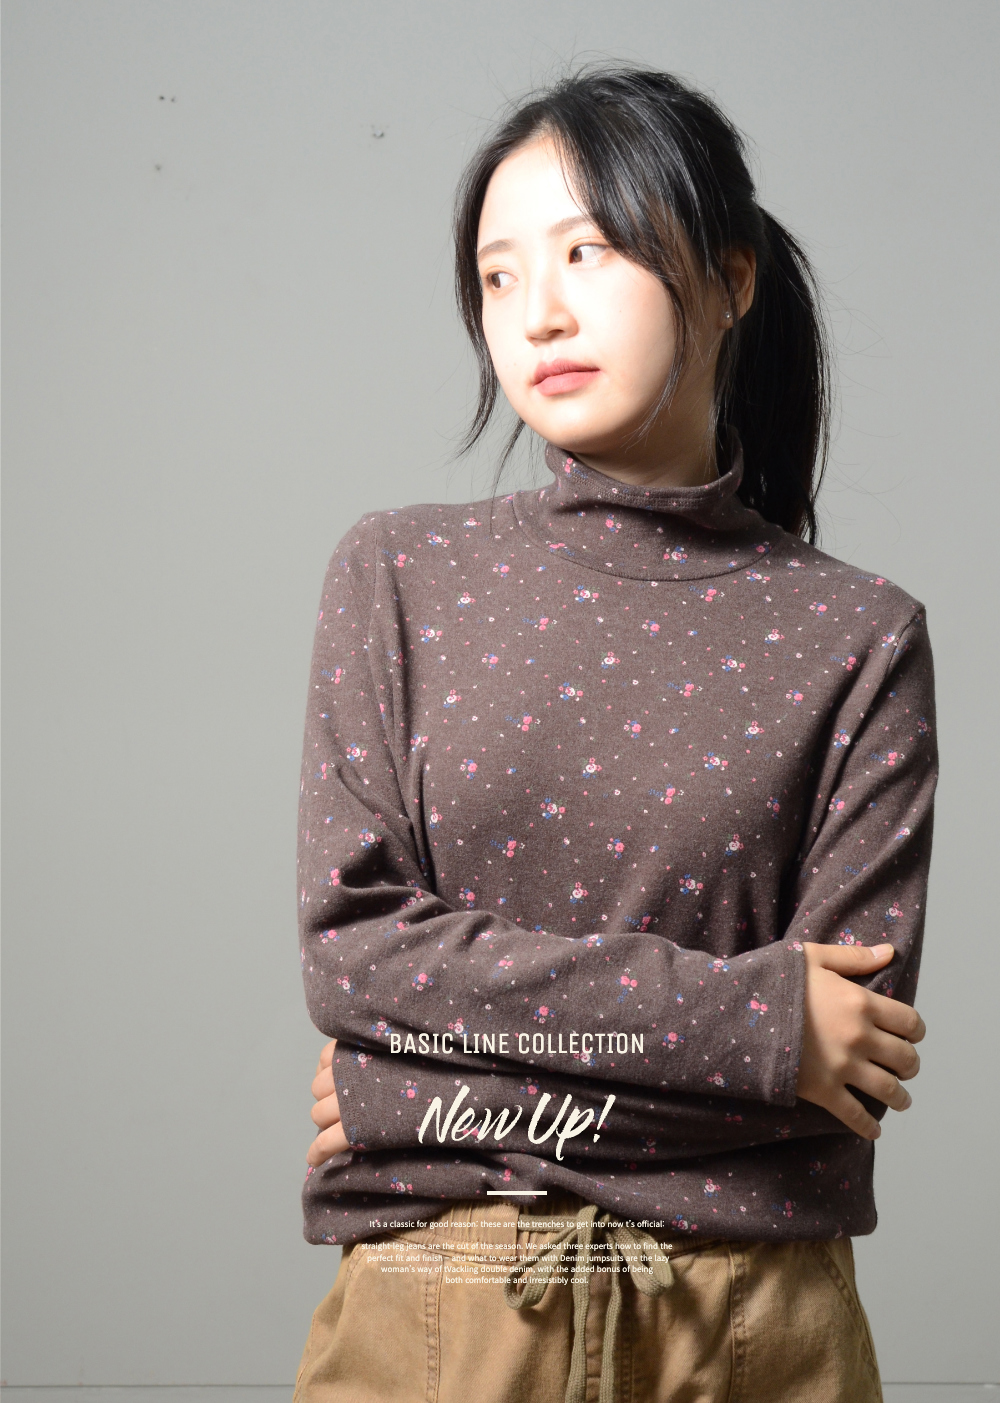 blouse model image-S1L34